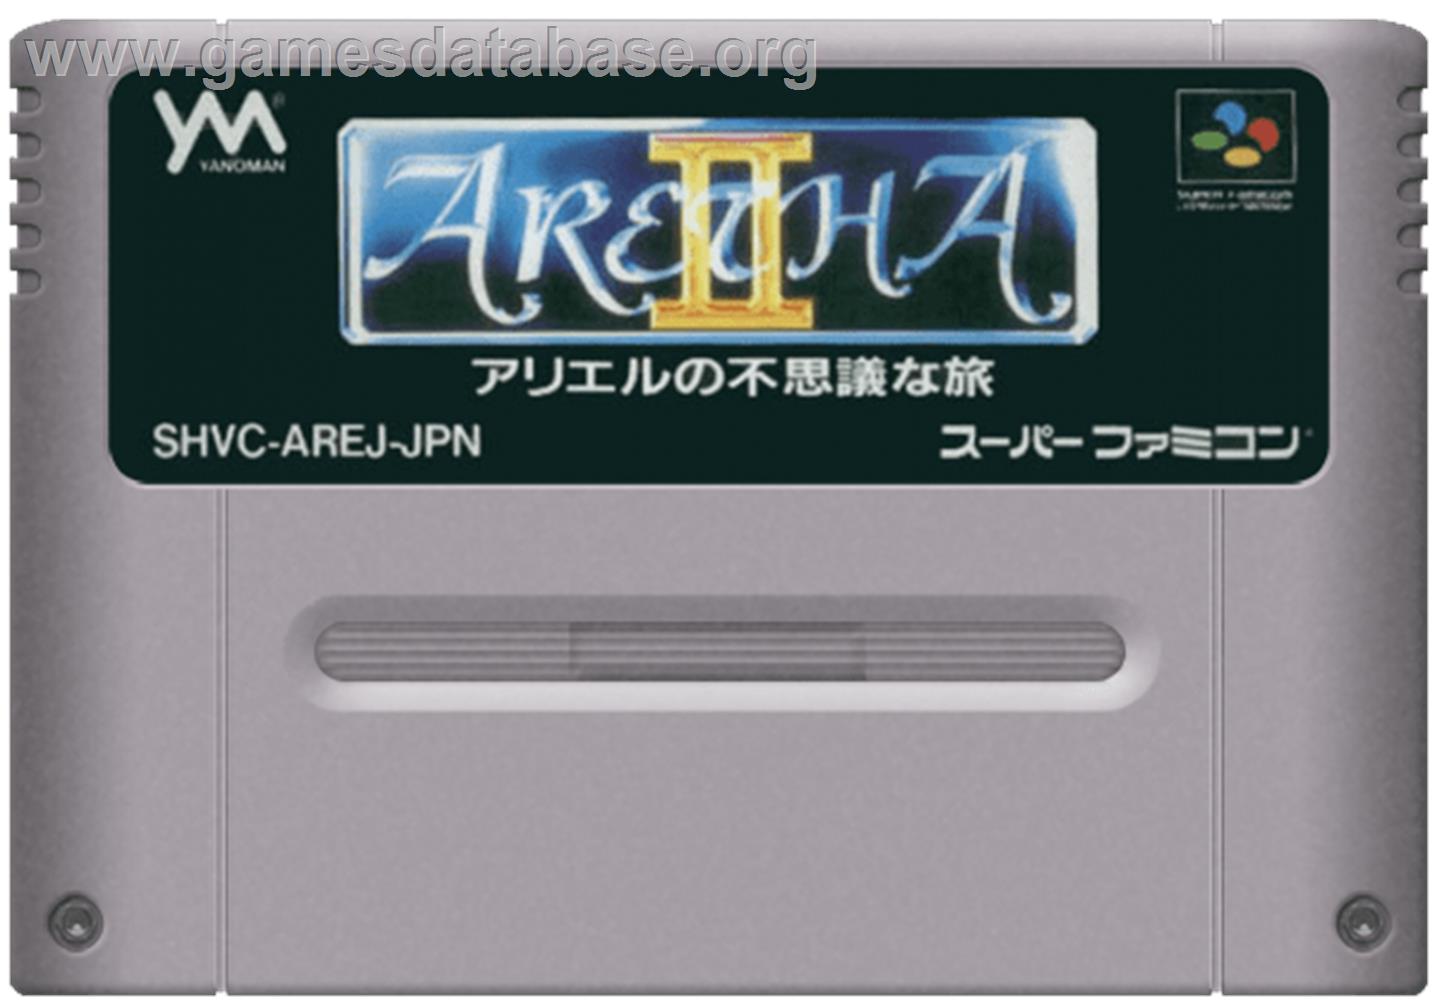 Aretha II: Ariel Fushigi no Tabi - Nintendo SNES - Artwork - Cartridge